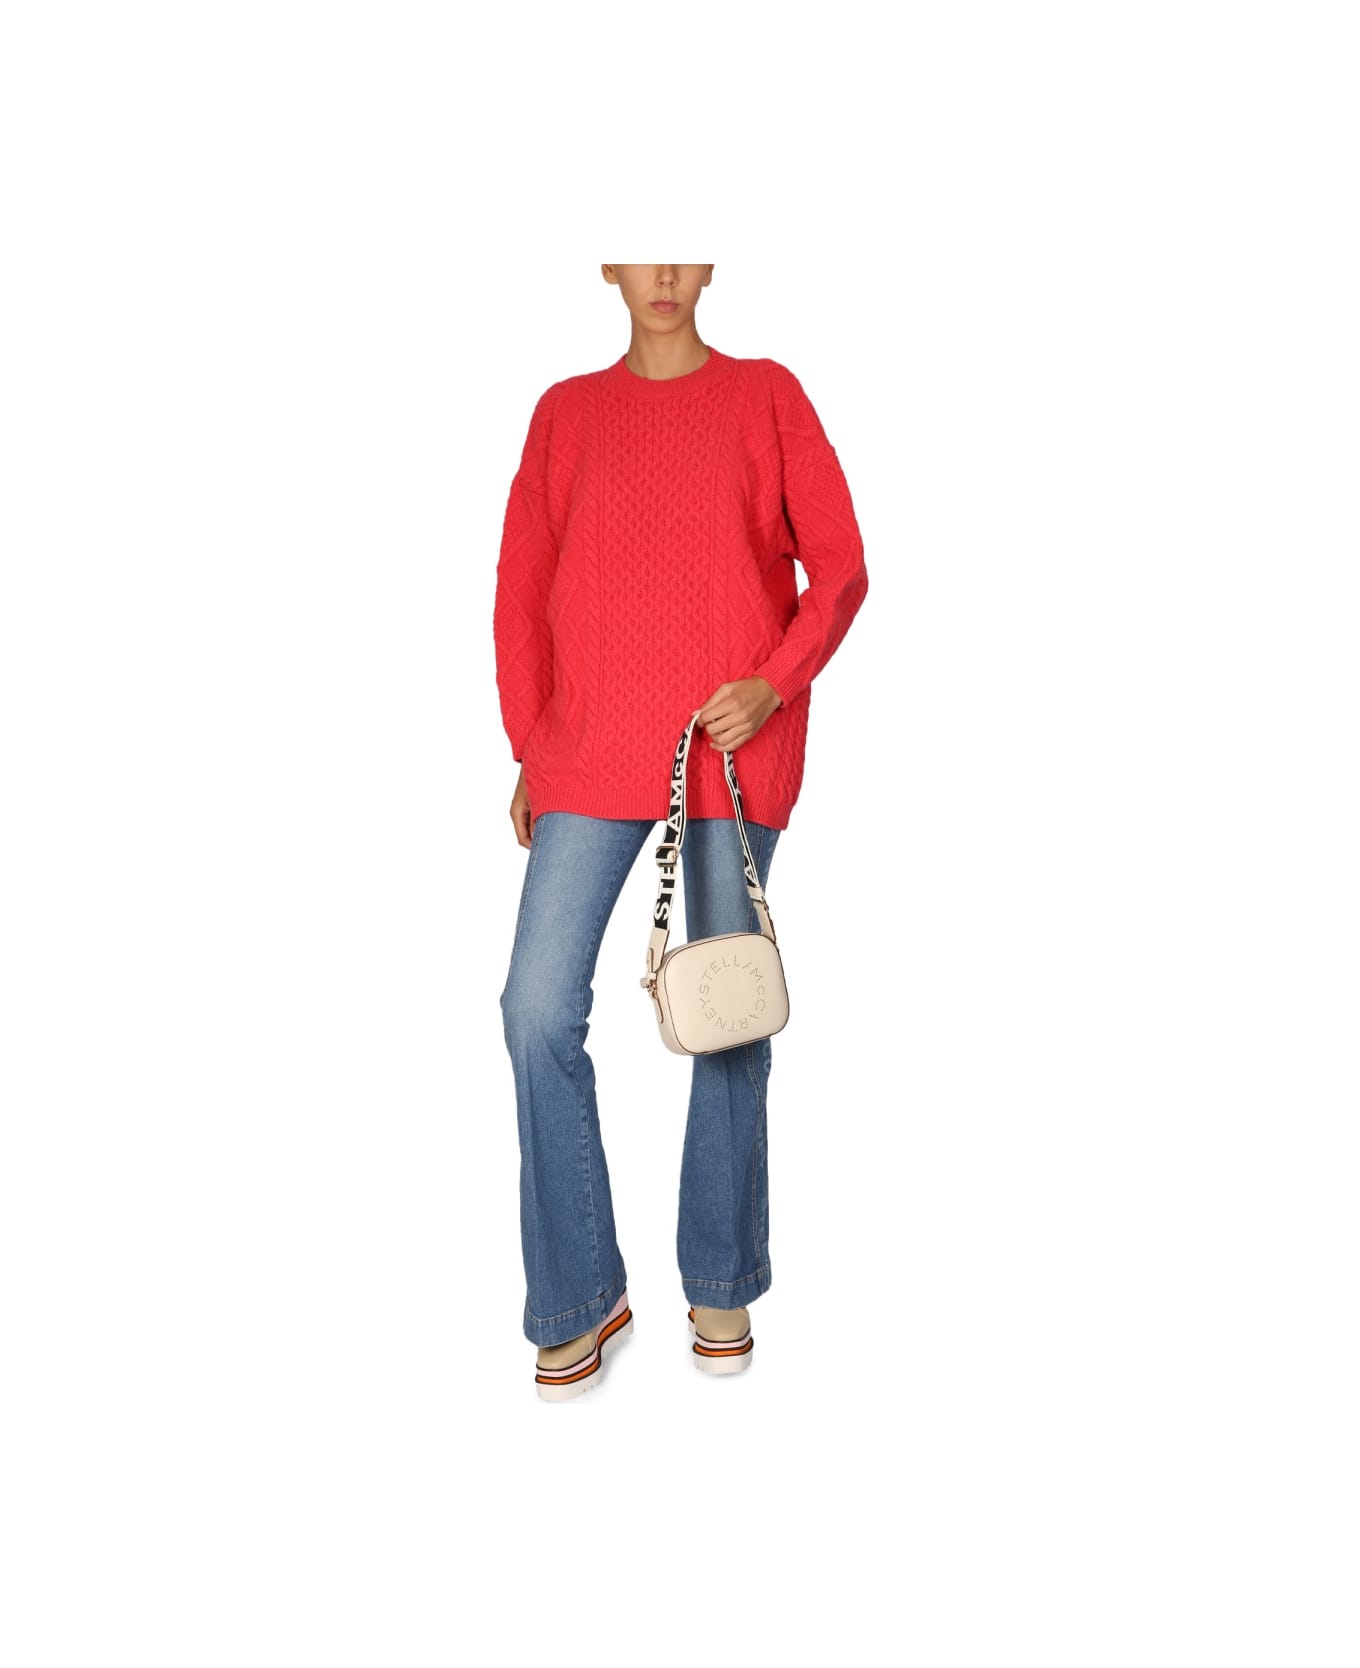 Stella McCartney Wool Crew Neck Sweater - RED